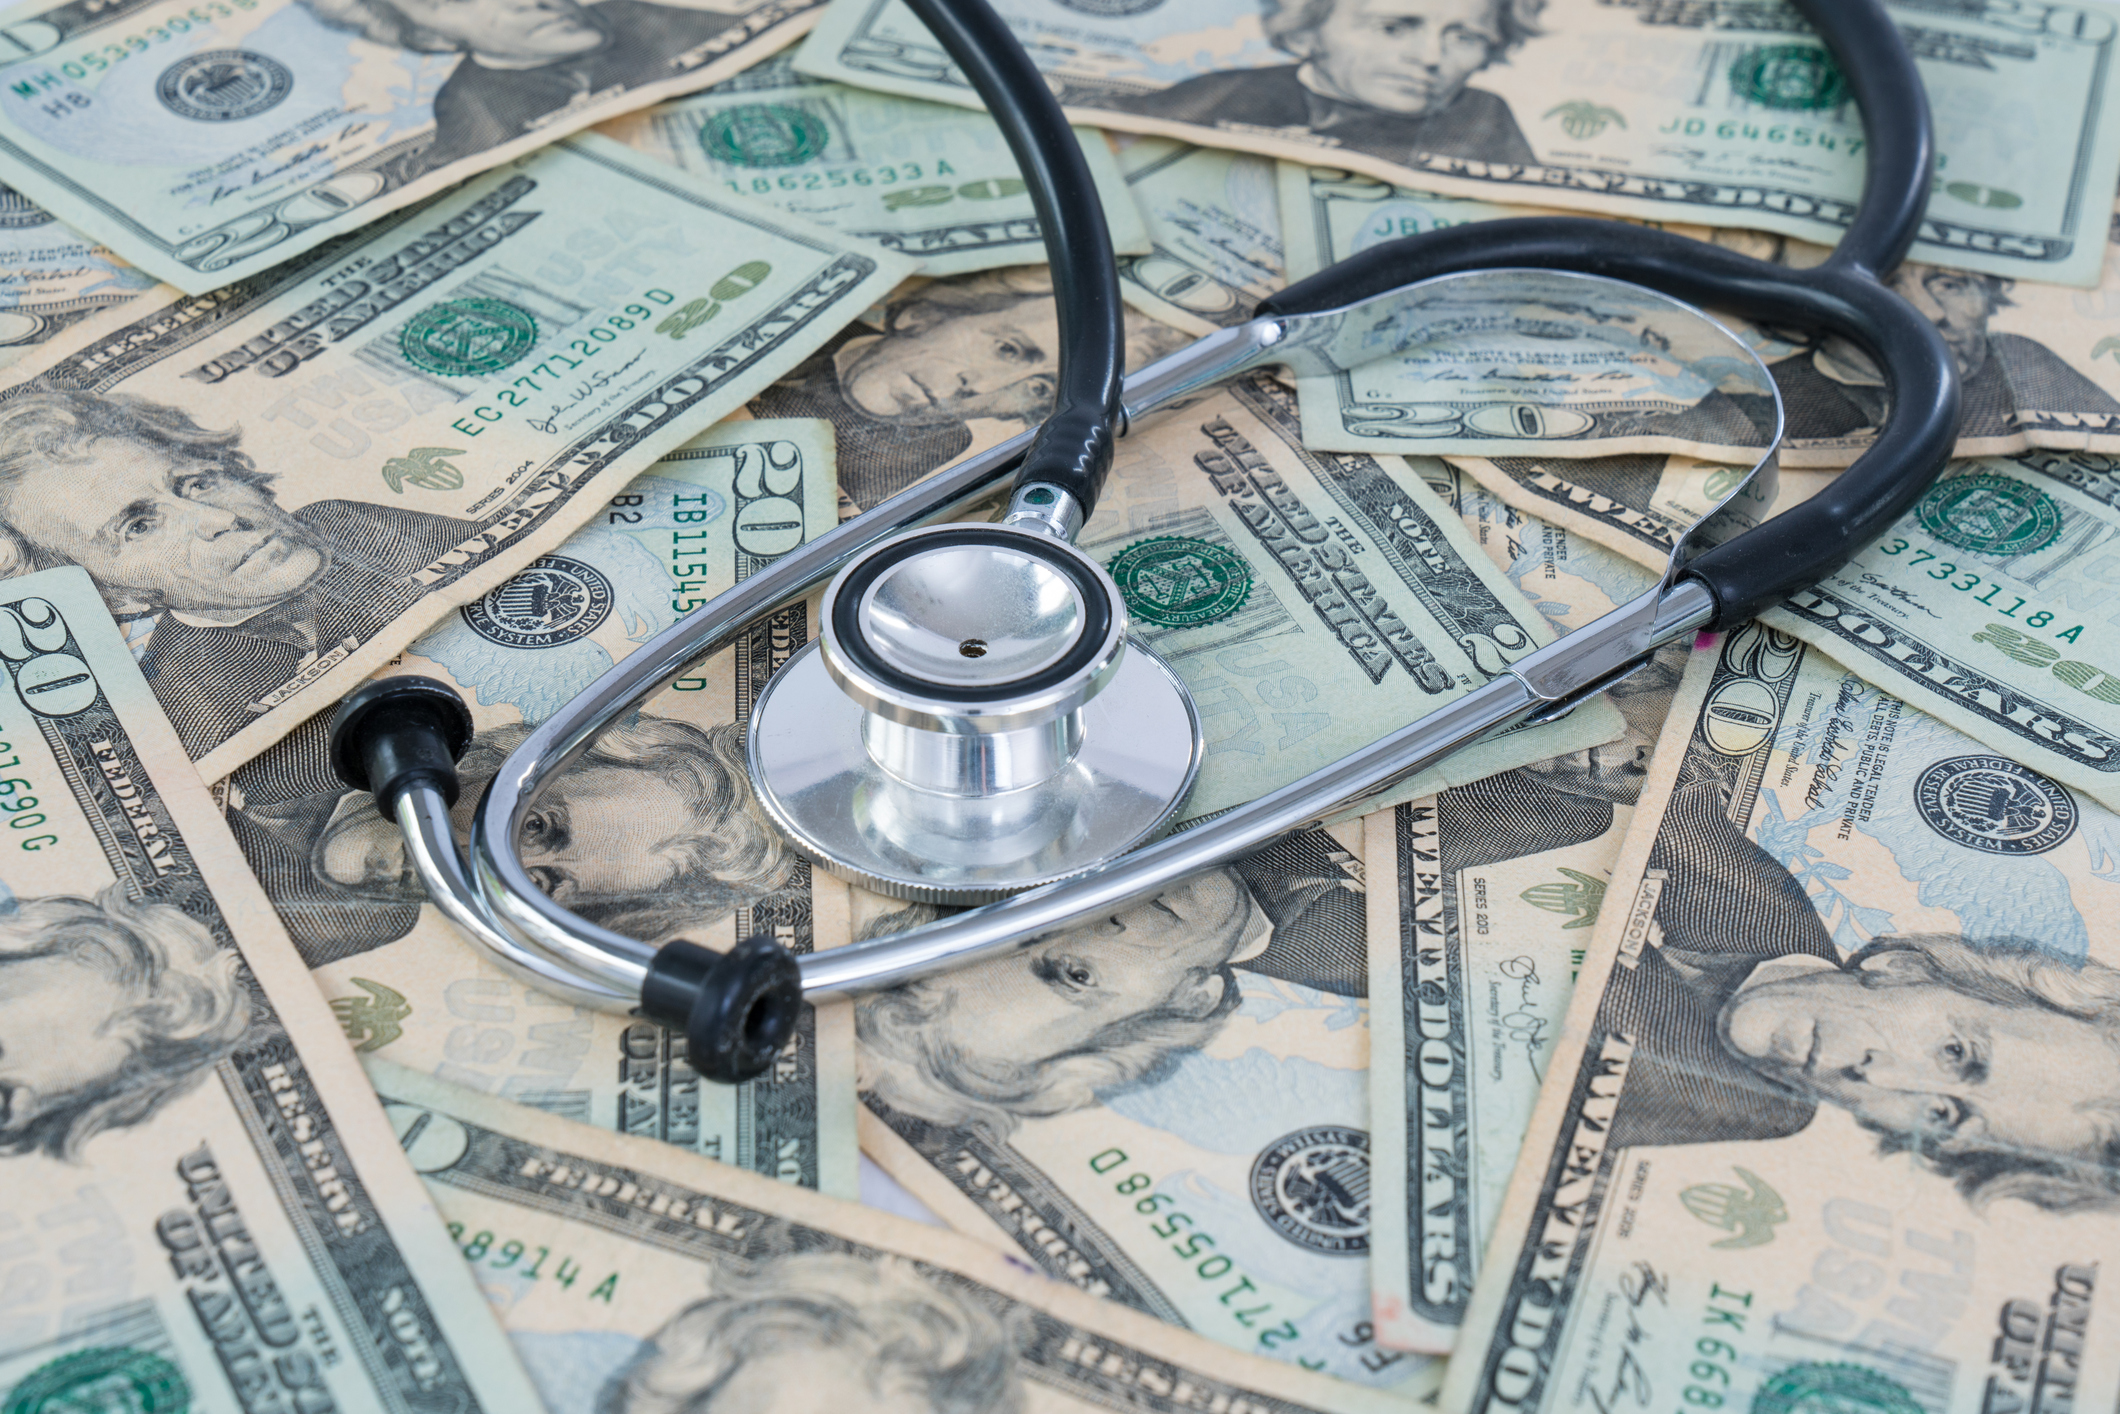 How Health Insurance Companies Make Money